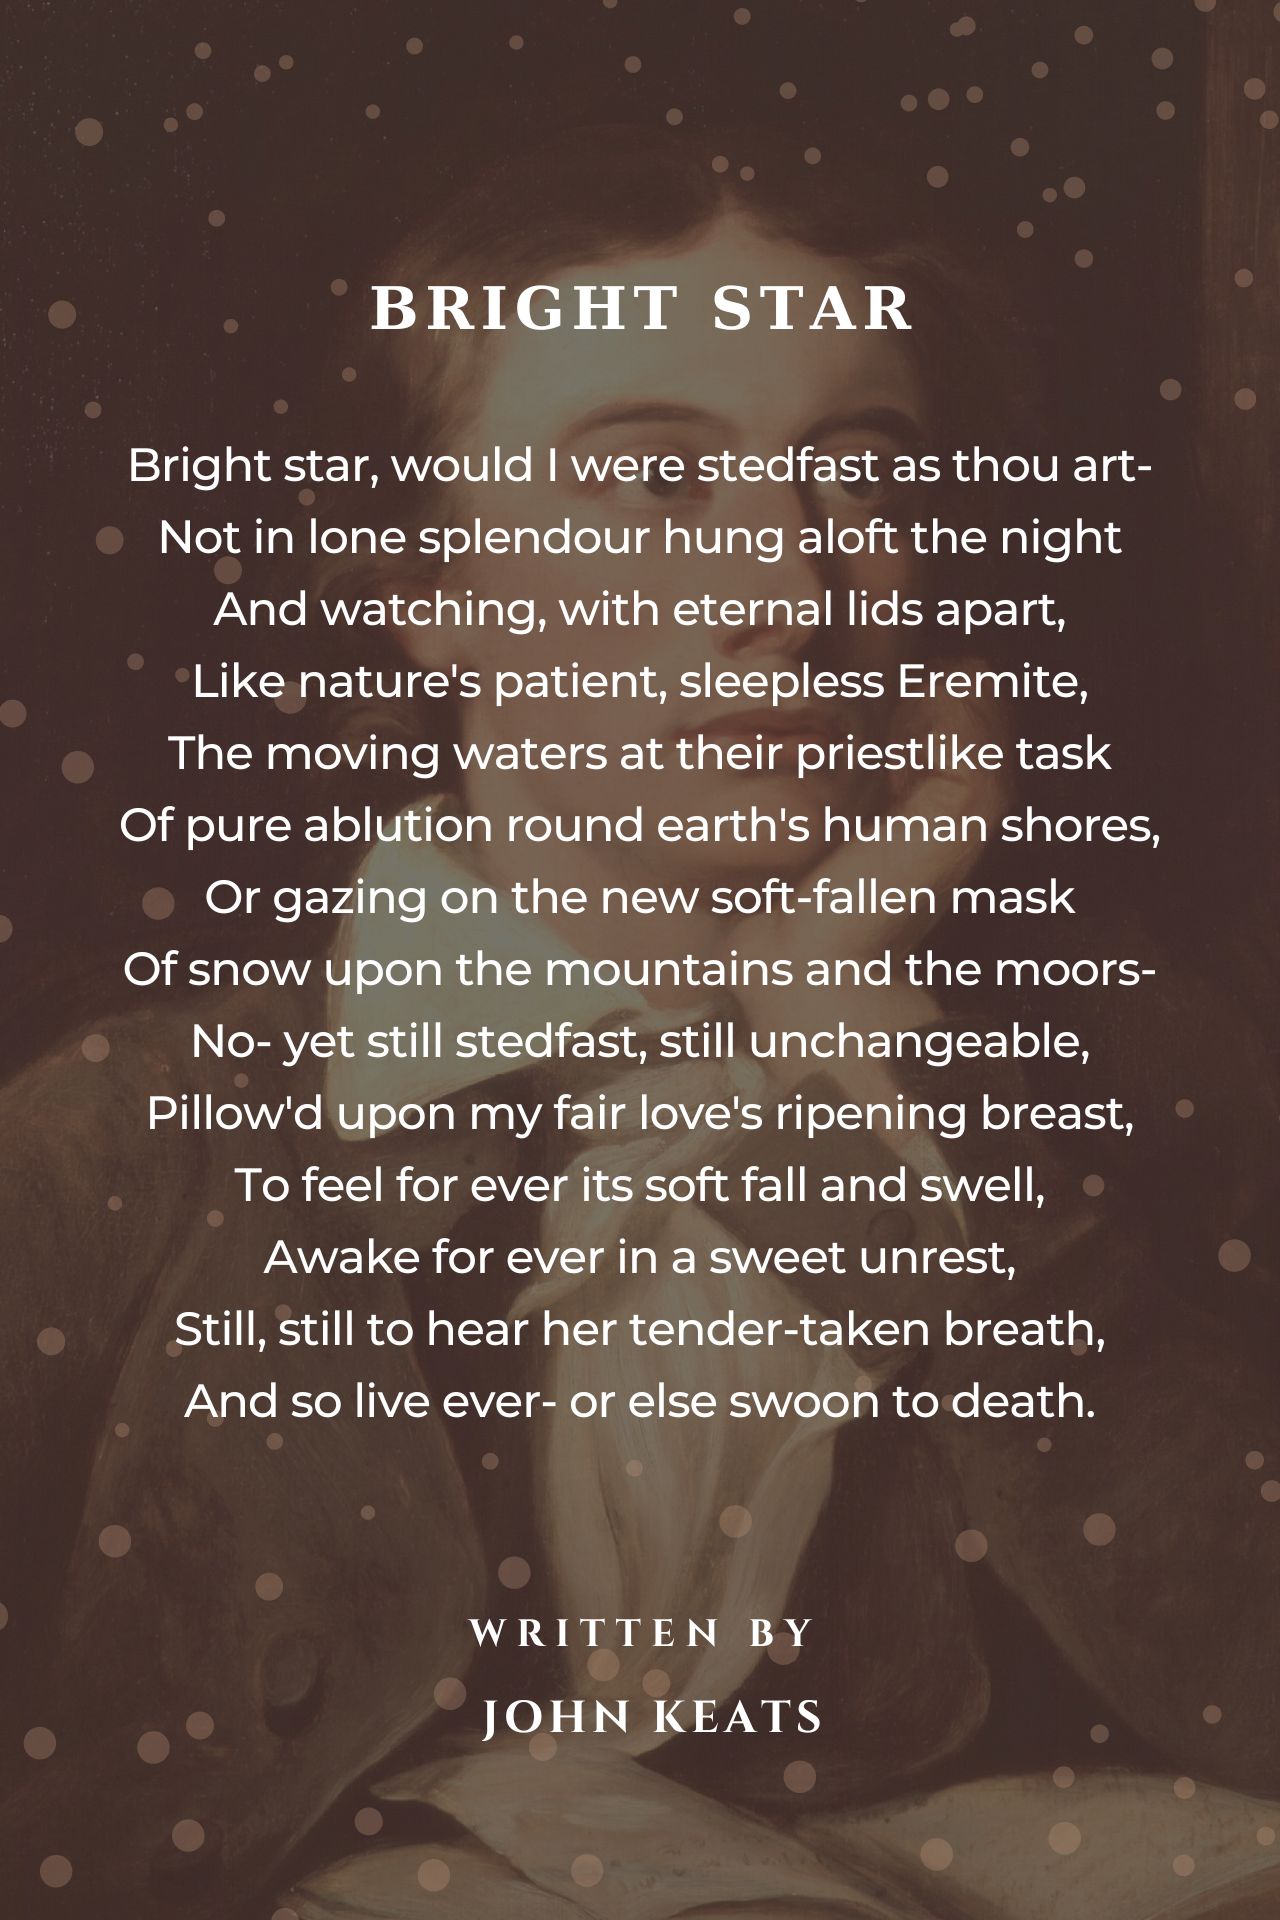 bright star by john keats theme